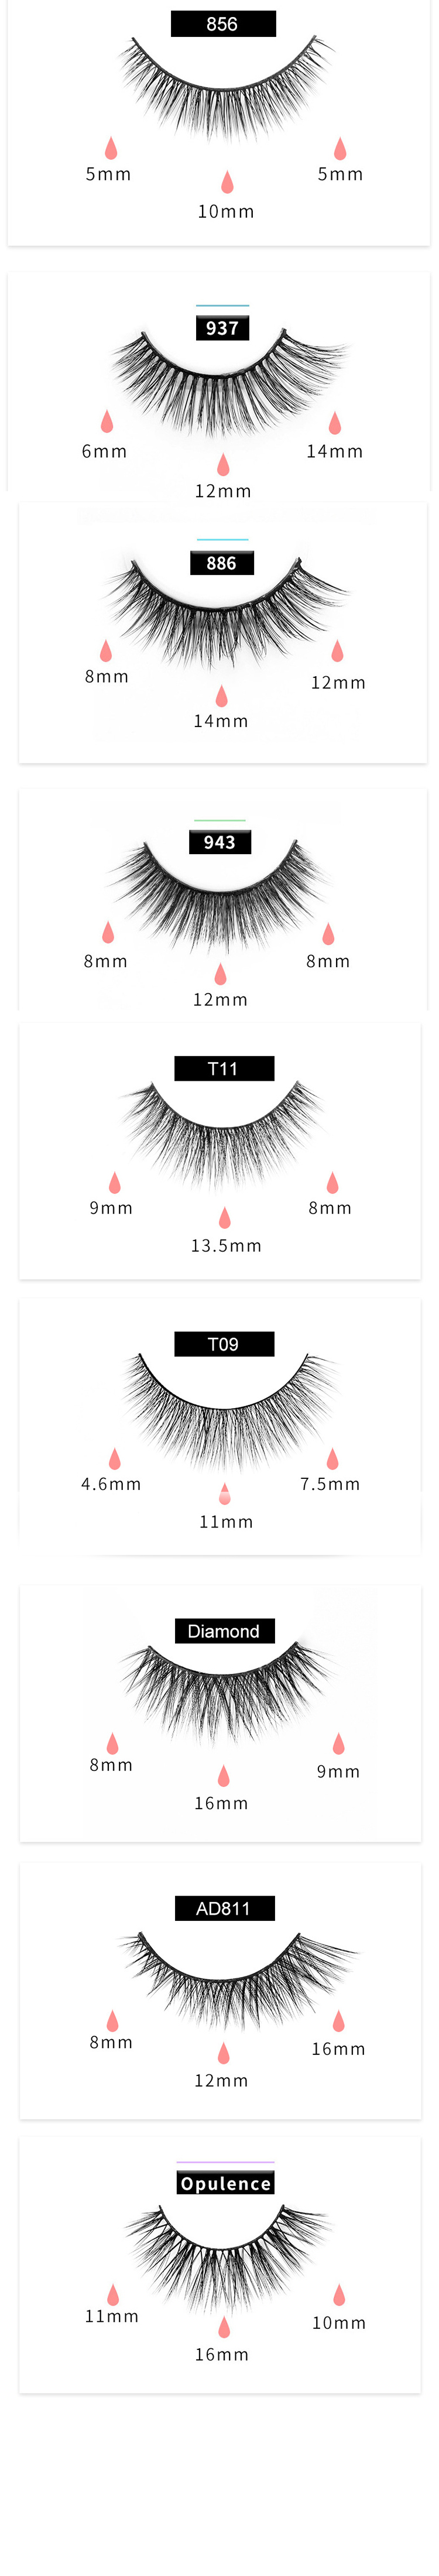 different-lash-styles-of-10magnets-eyelashes-vendor-USA.jpg